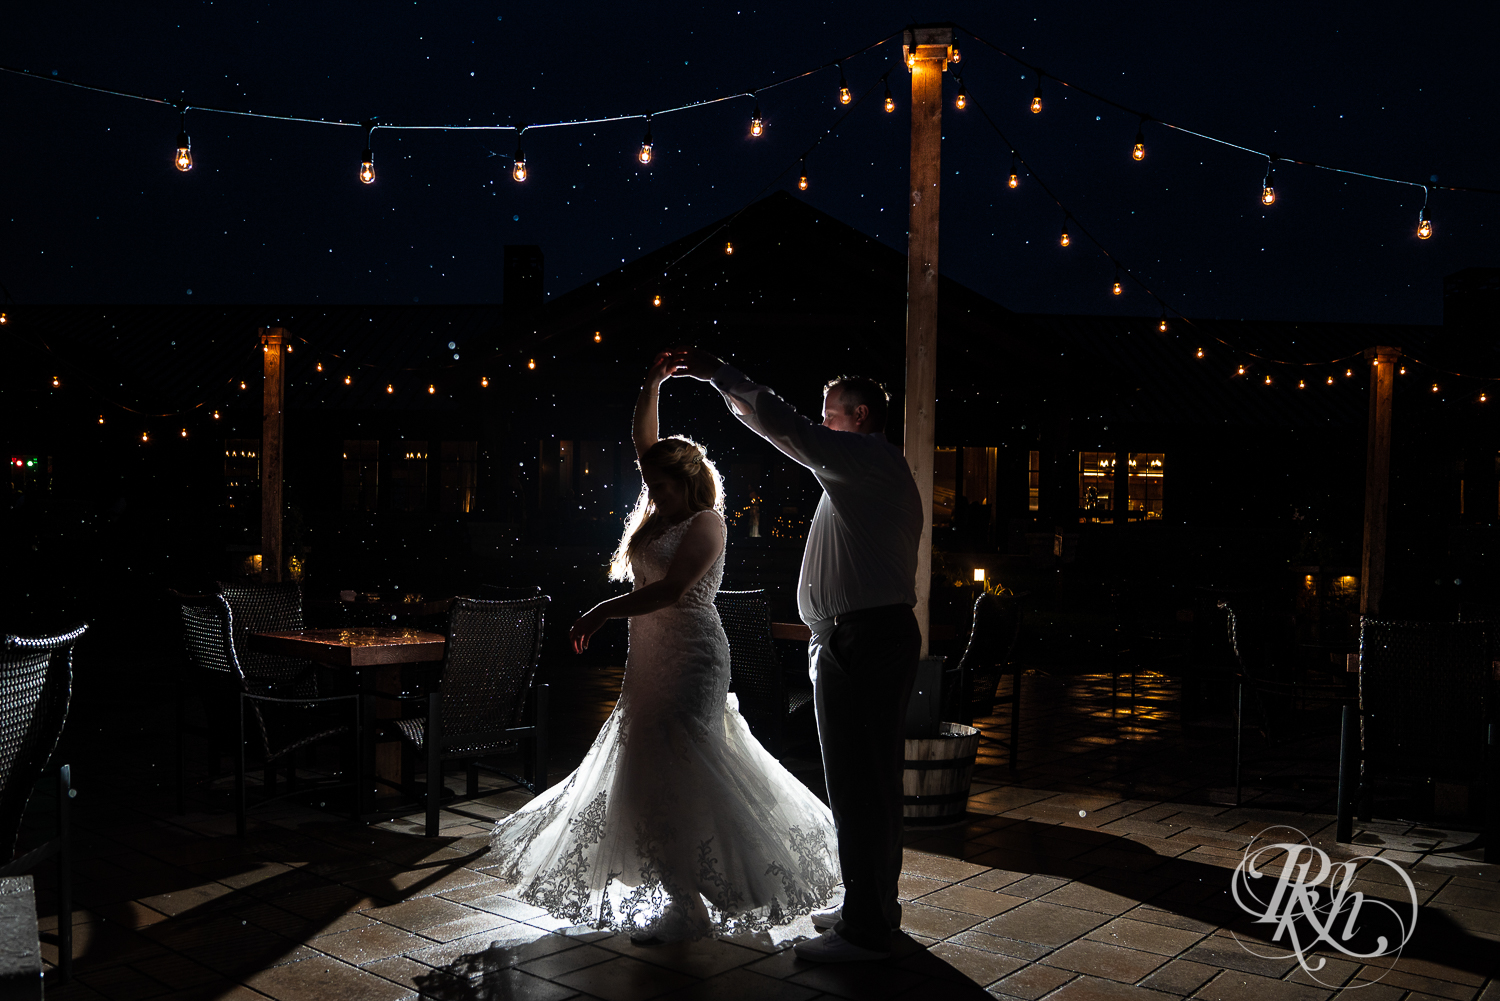 Bride and groom dancing in rainy wedding night at 7 Vines Vineyard in Dellwood, Minnesota.